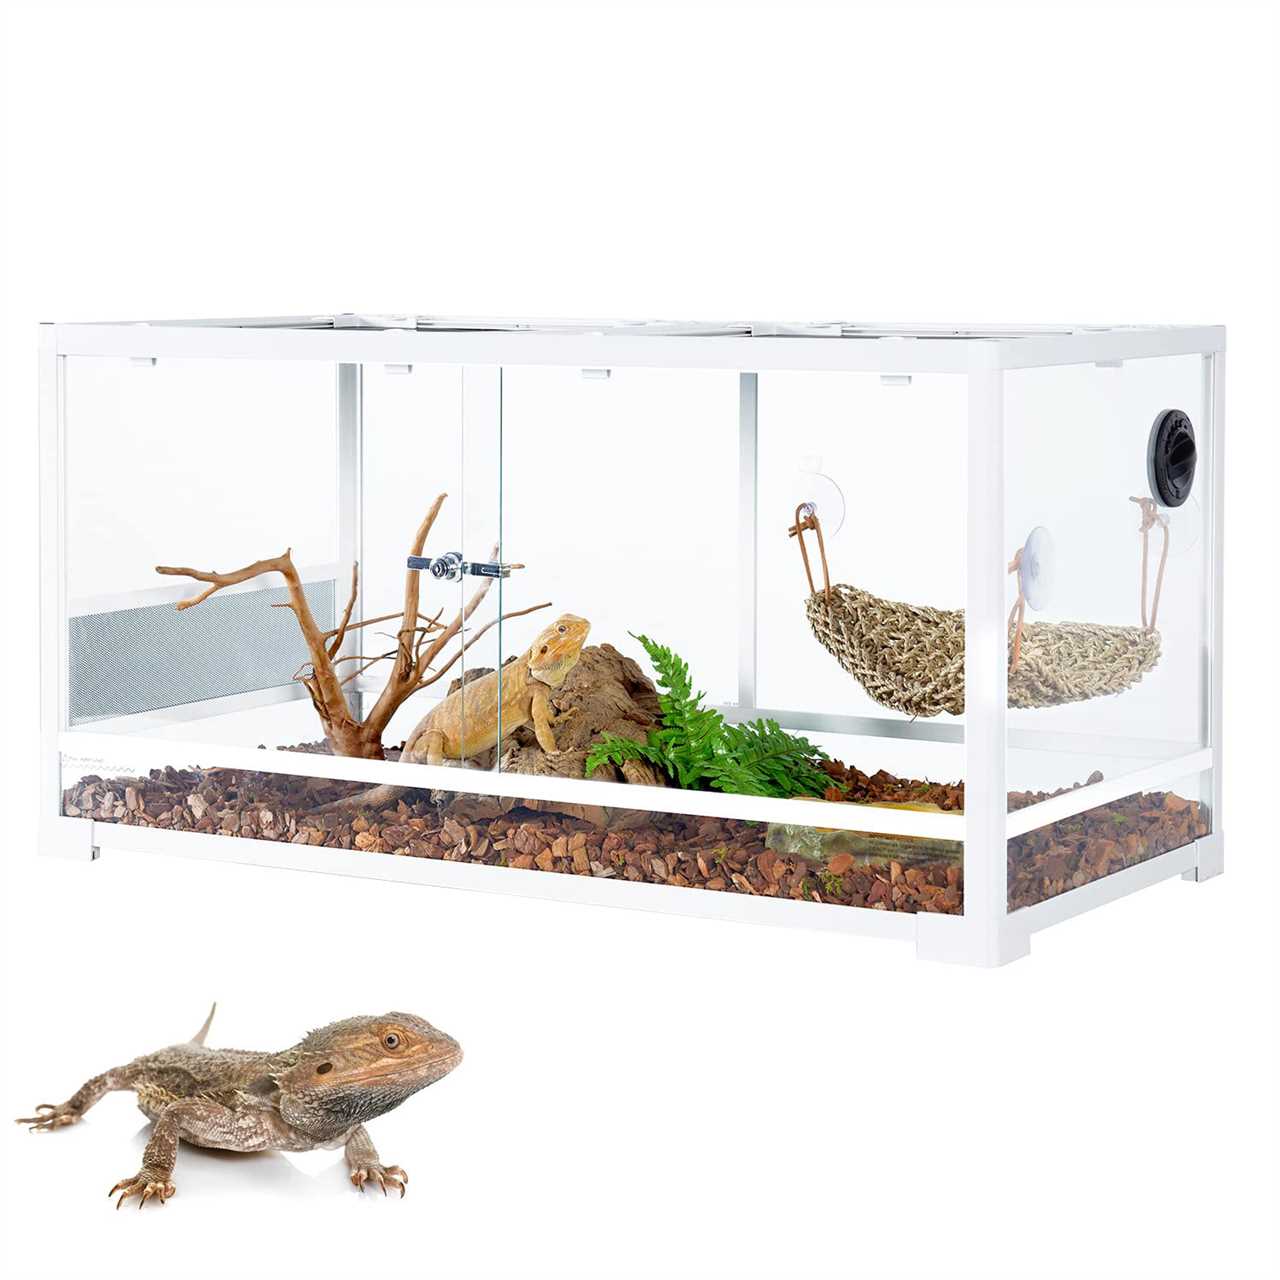 Reptile tank sizes